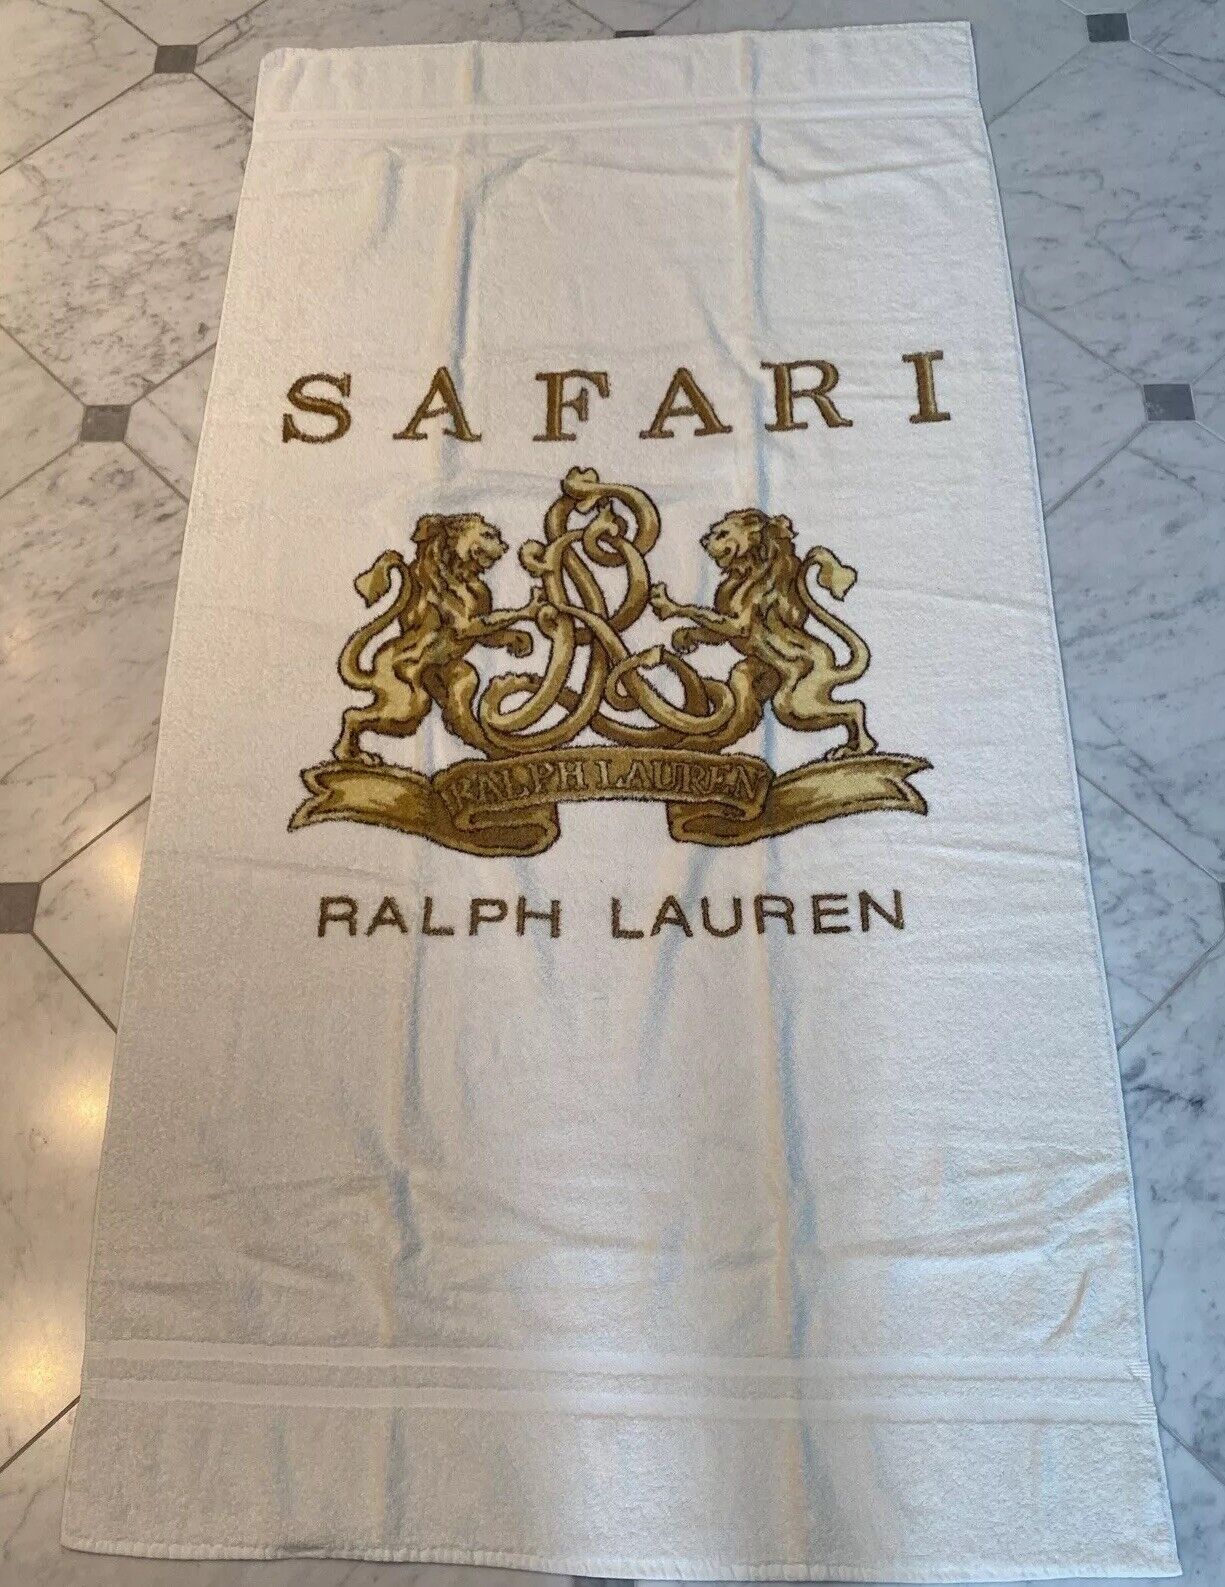 Vintage POLO RALPH LAUREN SAFARI Beach Towel 1990s 100% Cotton Made in USA Crest